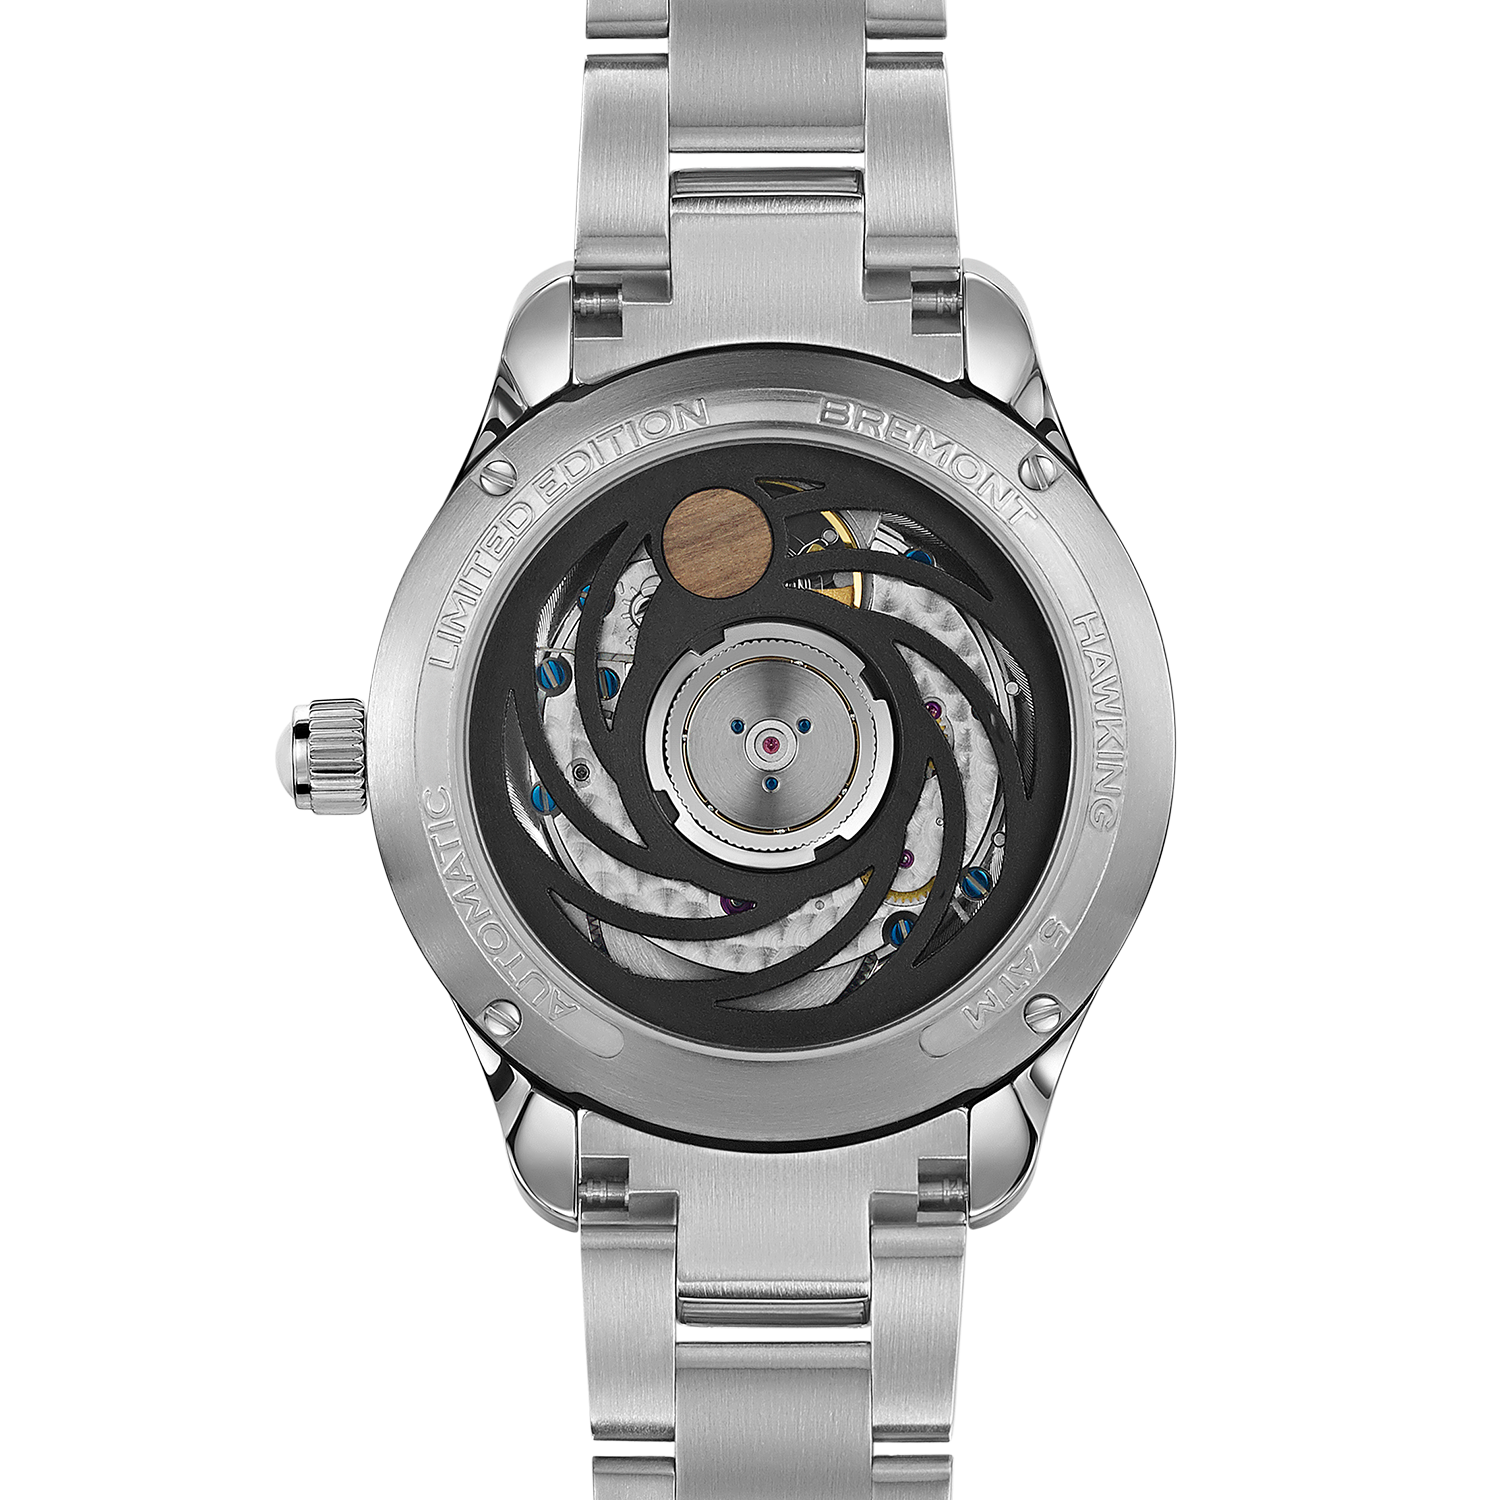 Bremont Watch Company Watches | Ladies | Hawking | LTD Limited Edition Hawking Quantum